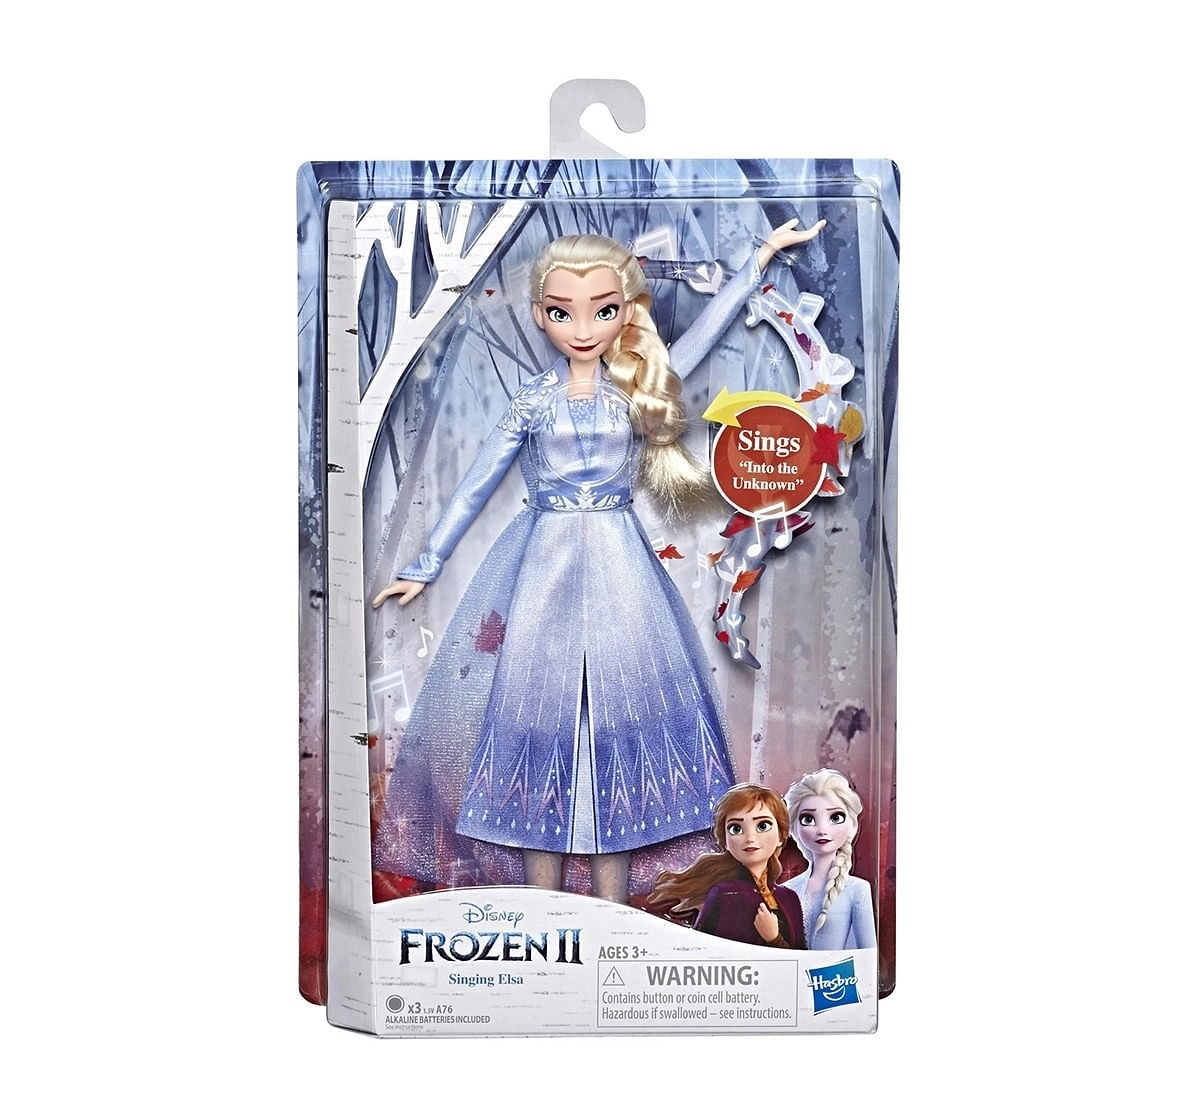 Disdney Frozen Elsa Assorted Dolls & Accessories for Girls age 3Y+ 